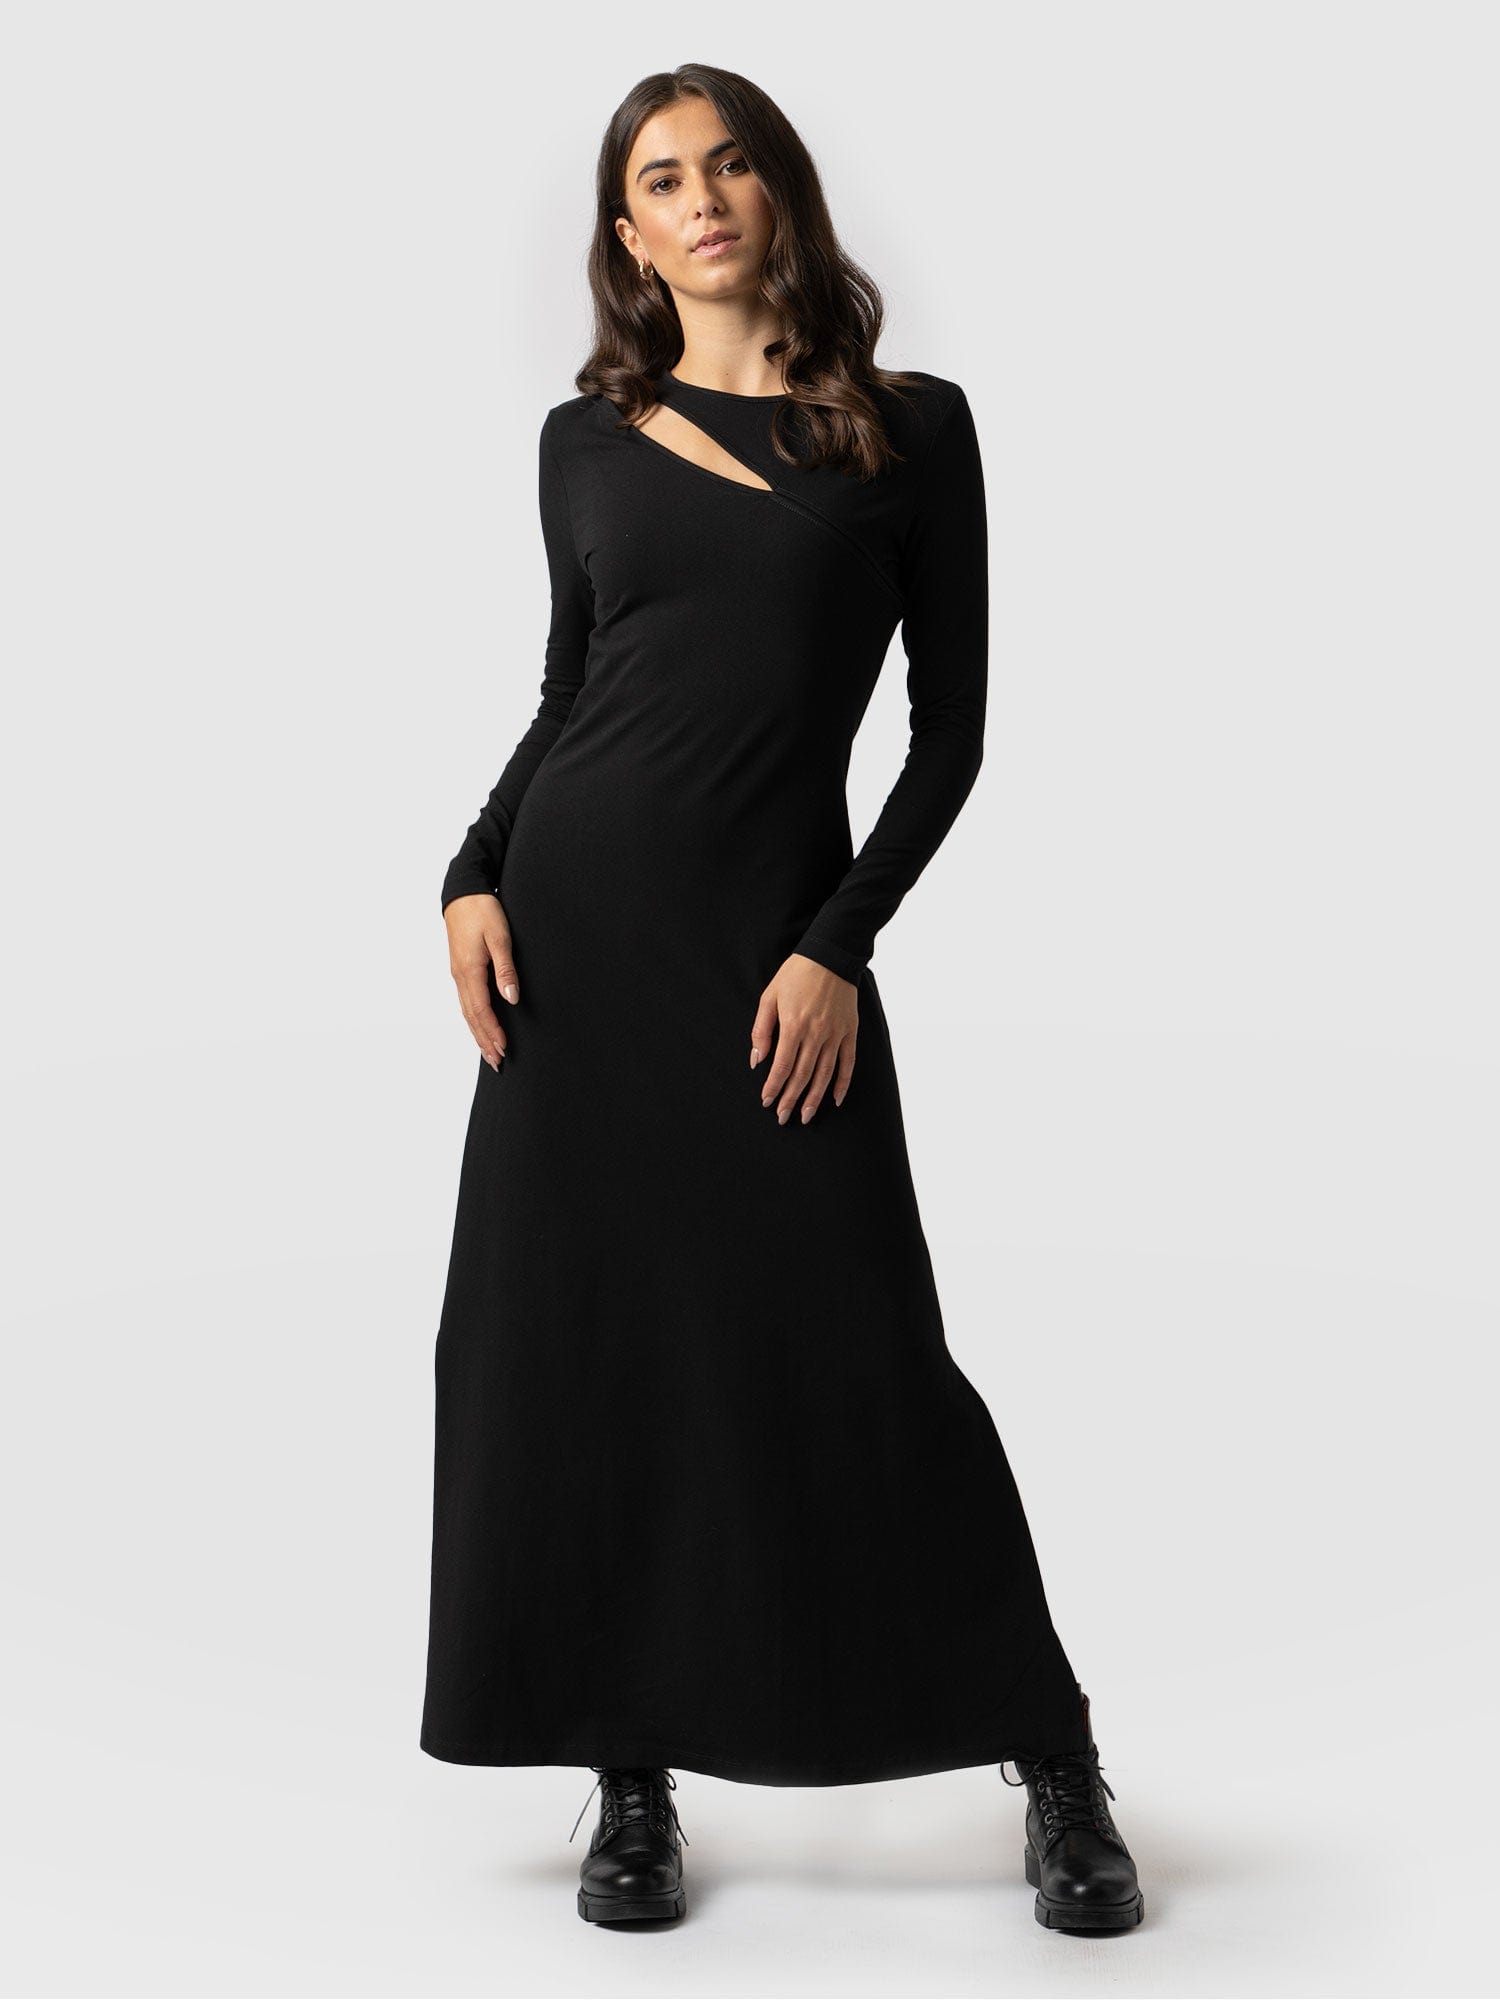 Black Long Prom Dress High Neck Sweetheart Formal Dress